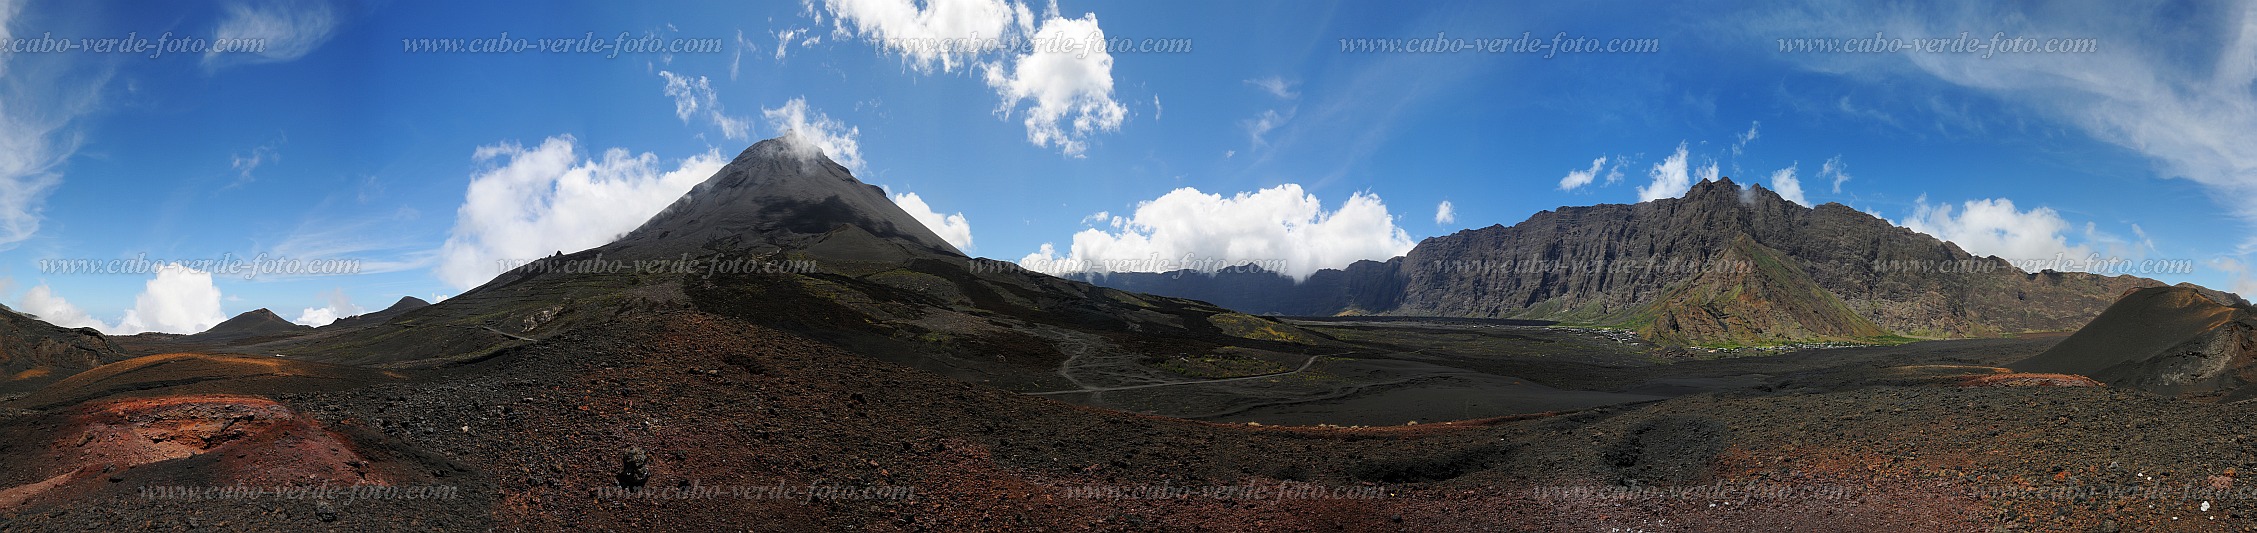 Fogo : Ch das Caldeira Monte Preto : volcano : Landscape MountainCabo Verde Foto Gallery